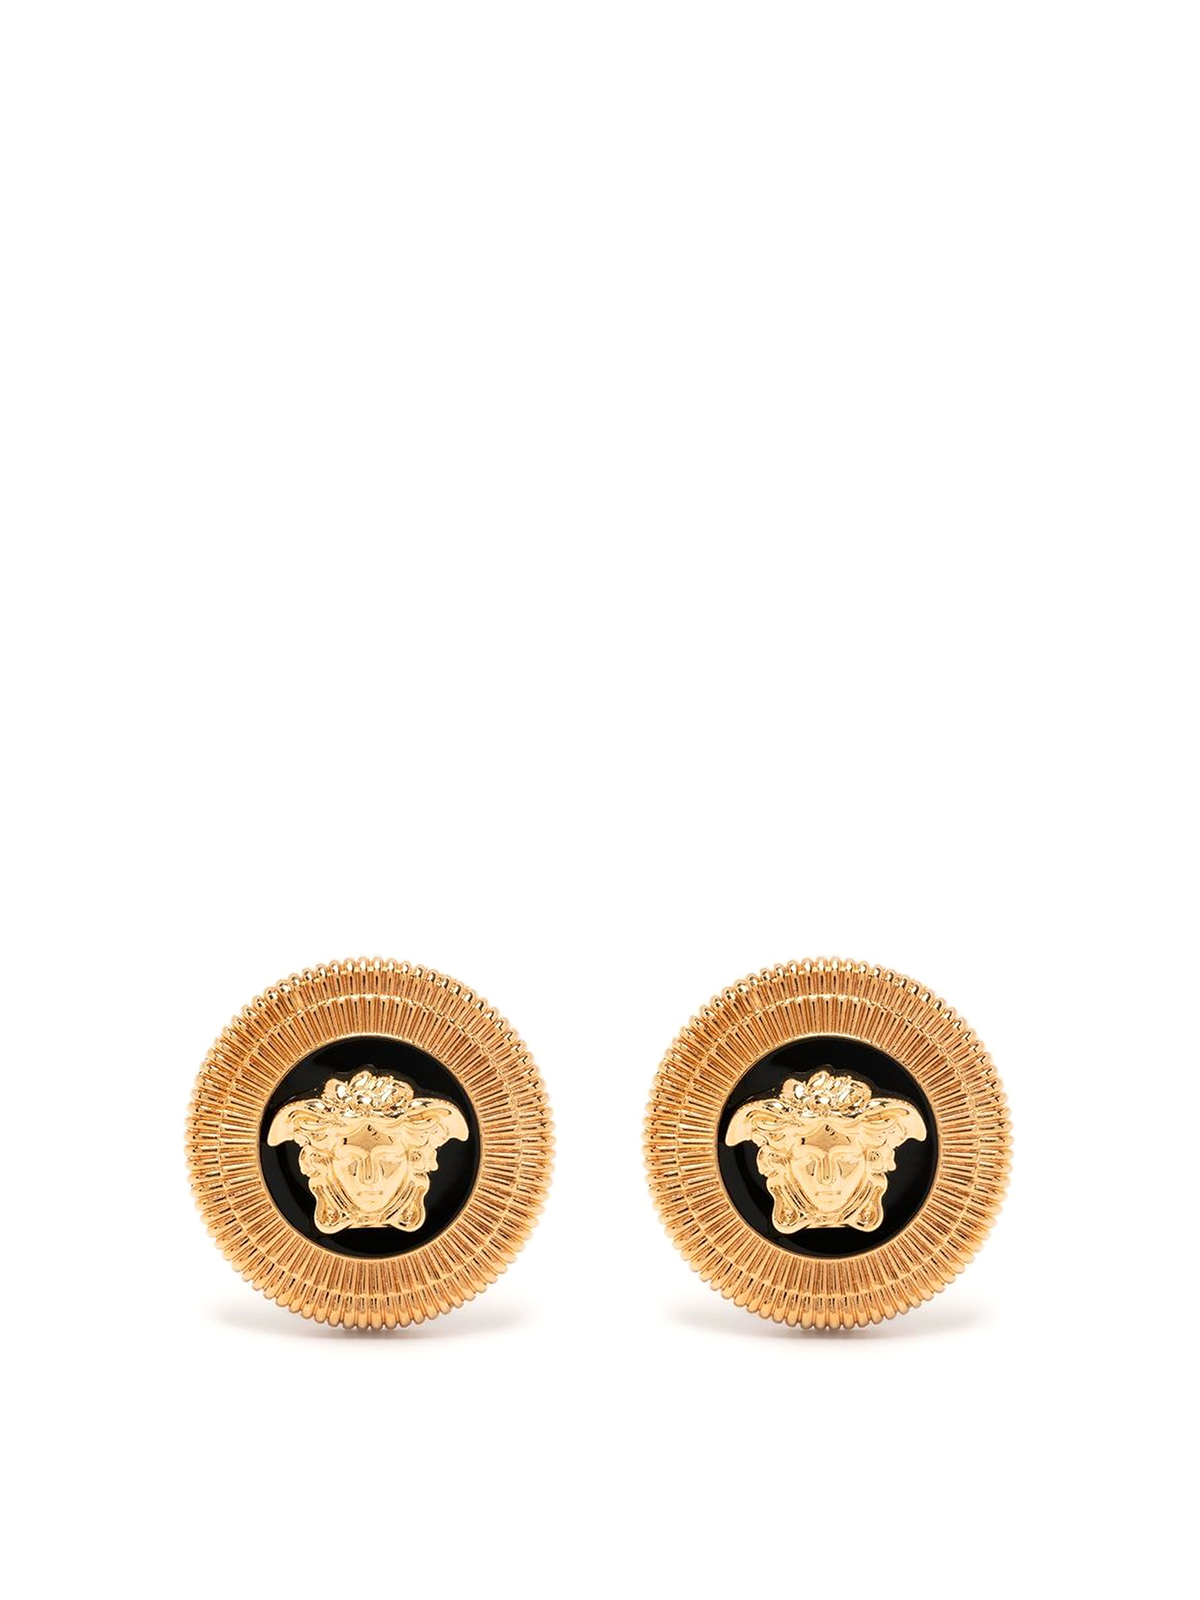 Earrings Versace - Black with Medusa details - 10053321A006384J120